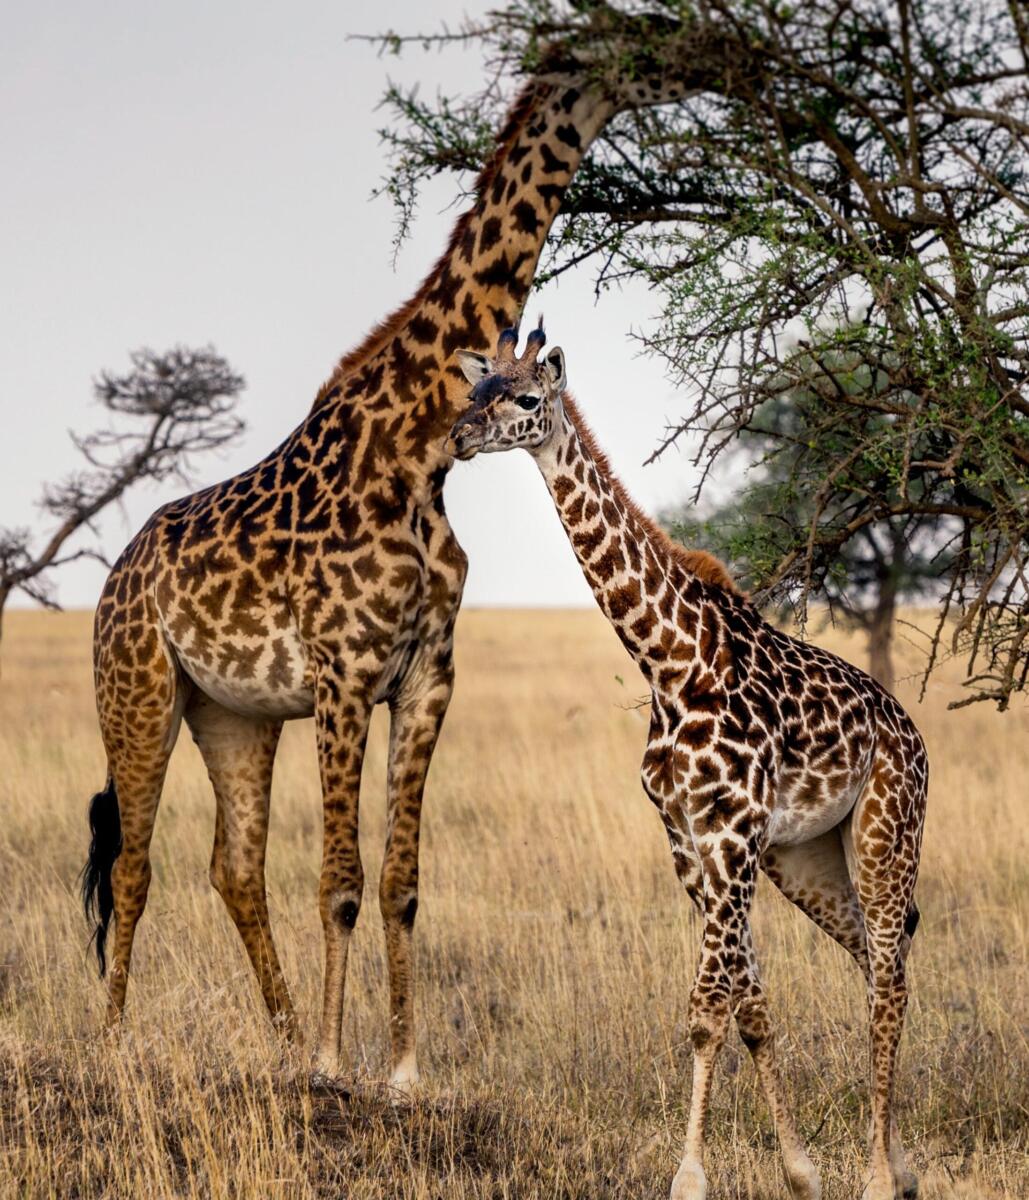 An adult giraffe and a giraffe calf browse from a tree in the Serengeti in Tanzania